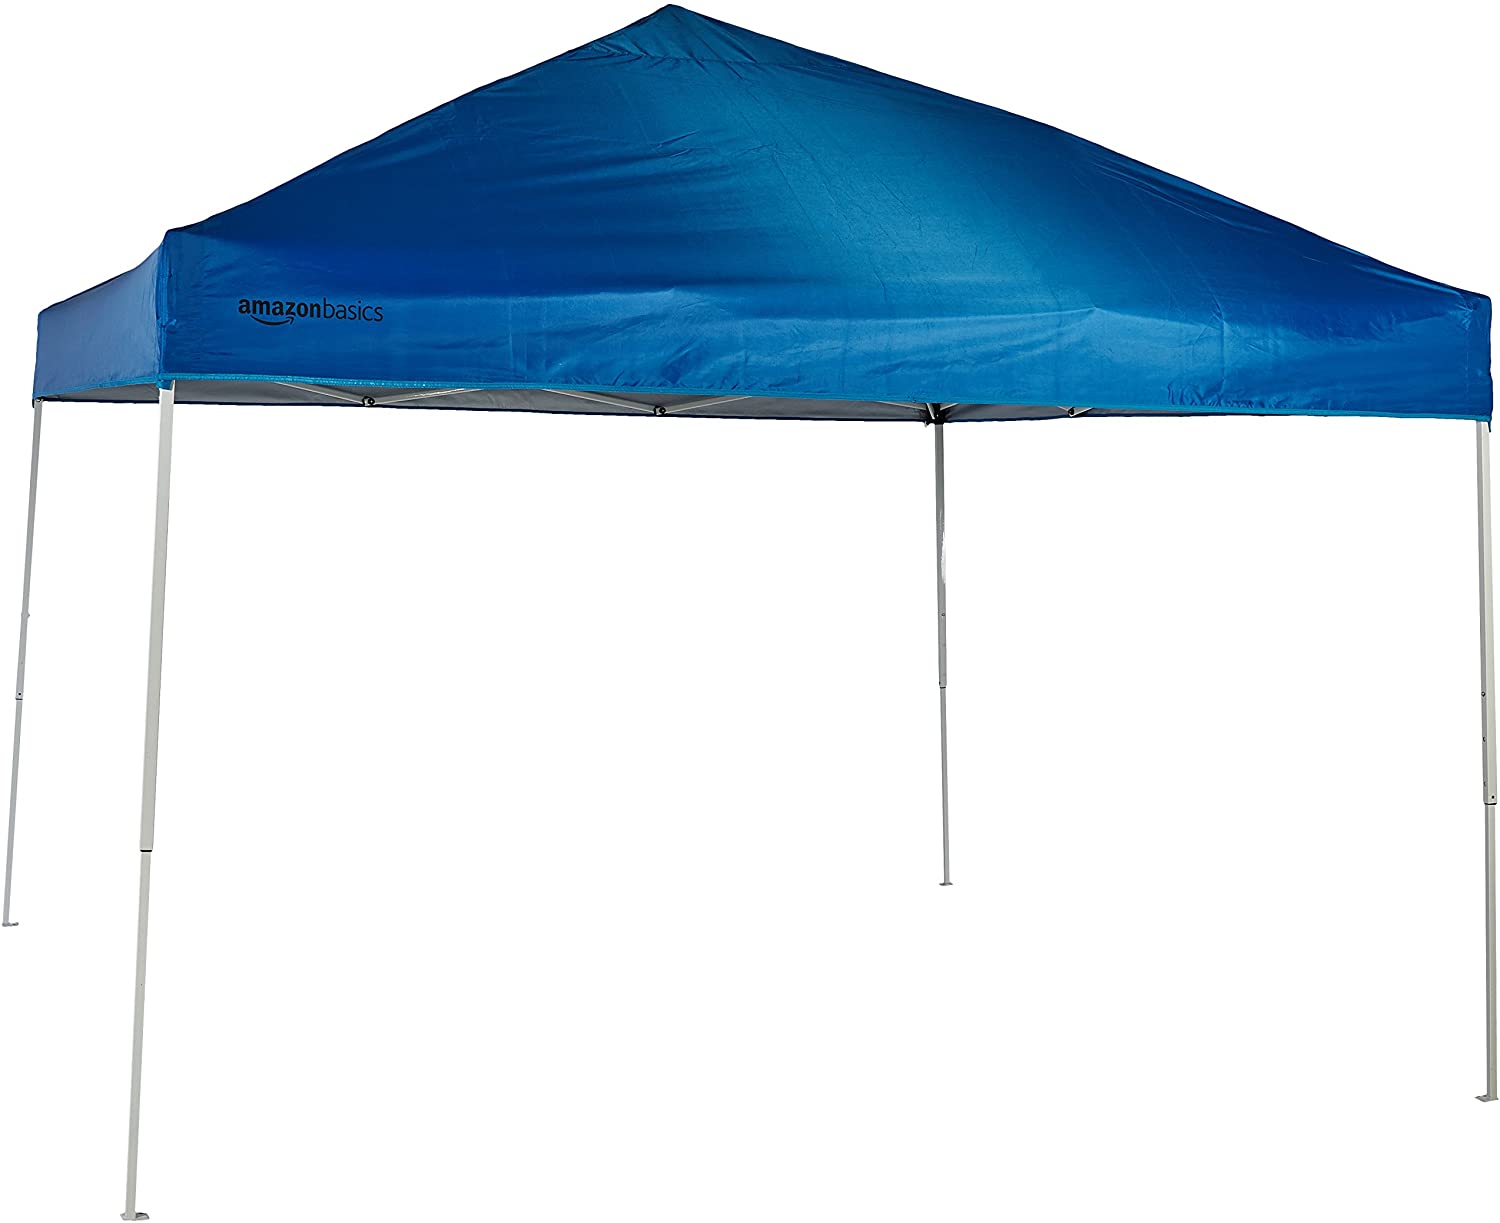 AmazonBasics Pop-Up Canopy Tent - 10' x 10', Blue